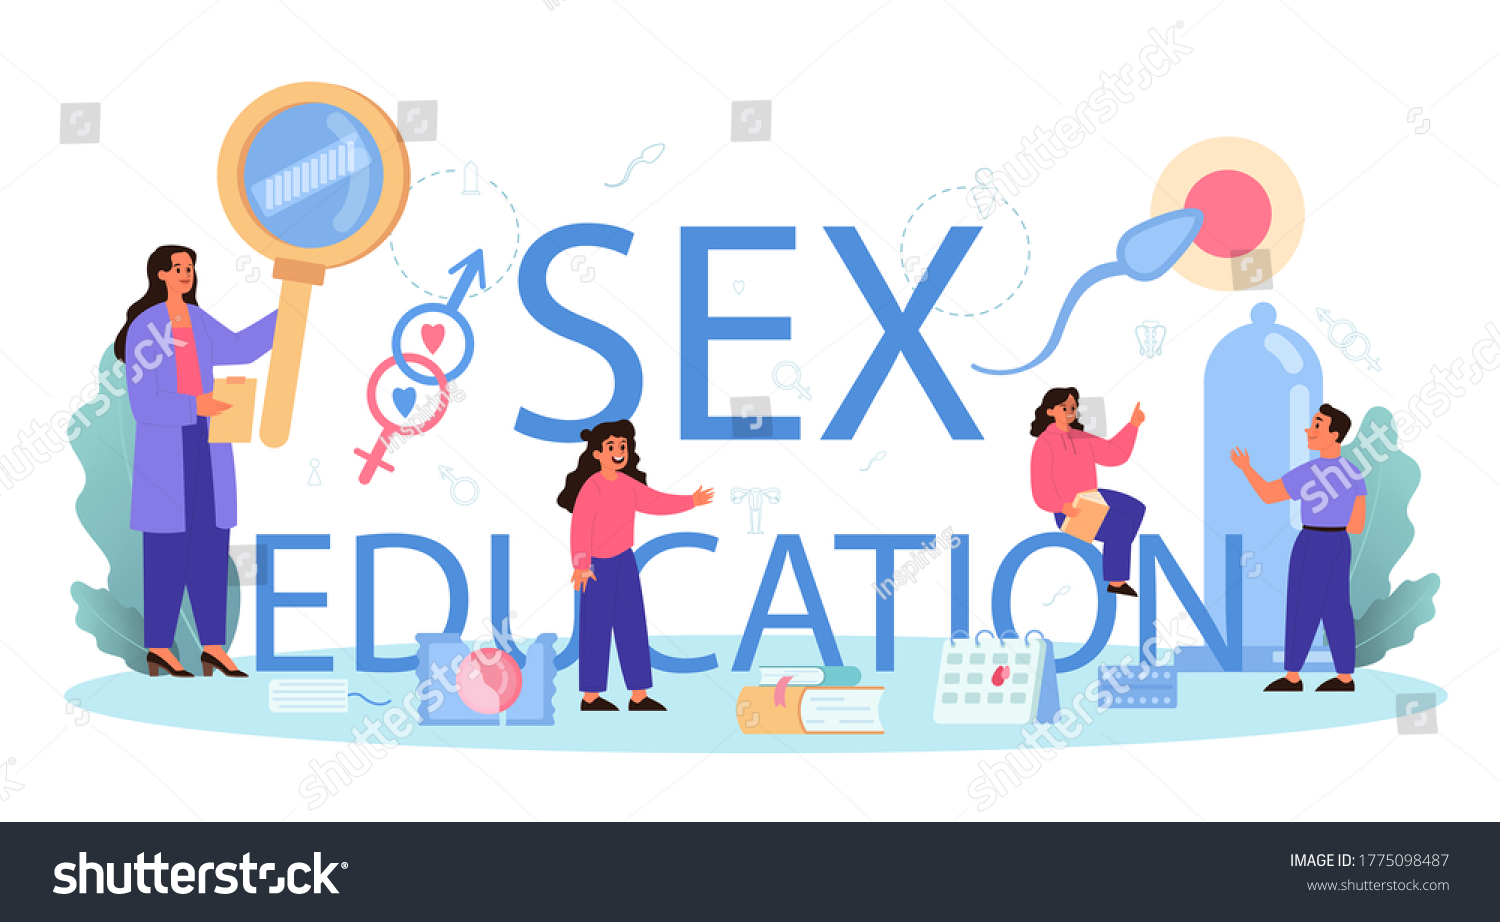 Sexual Education Typographic Header Sexual Health Stock Vector Royalty Free 1775098487 